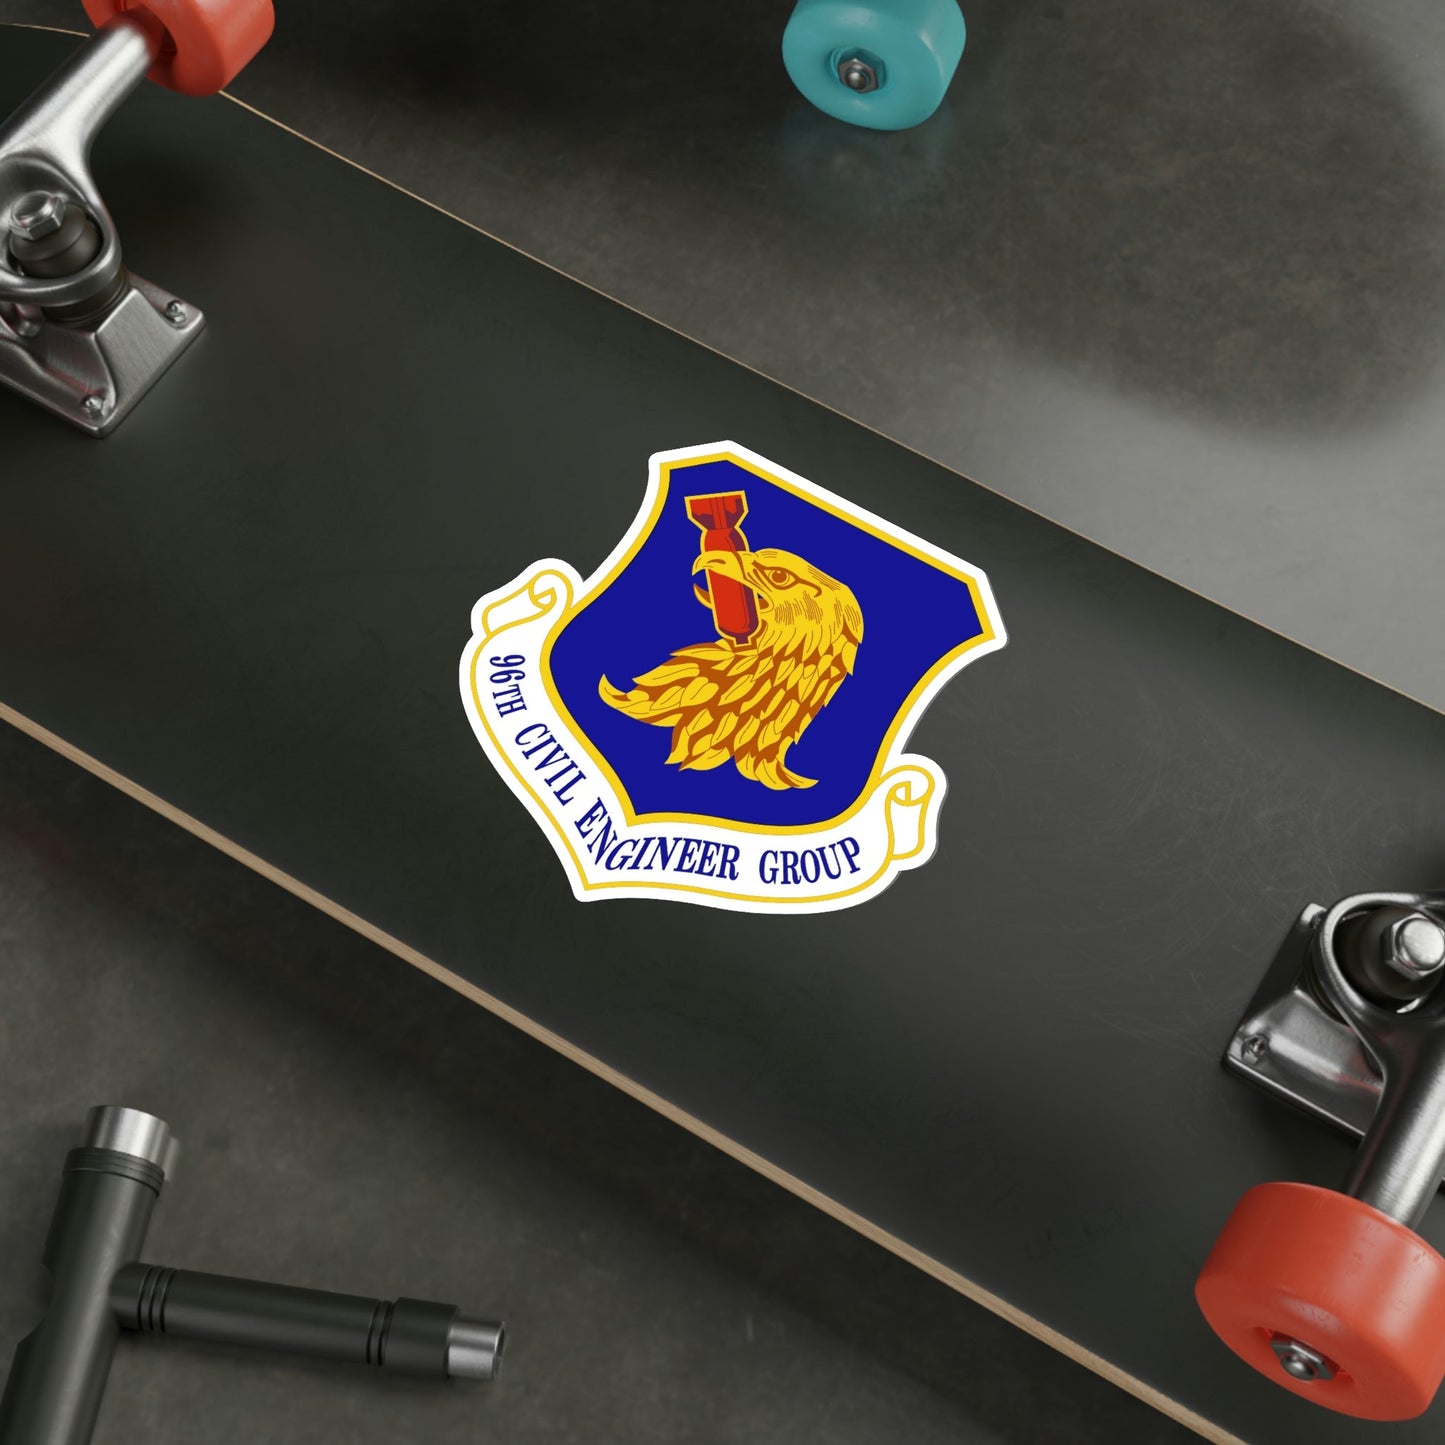 96 Civil Engineer Group AFMC (U.S. Air Force) STICKER Vinyl Die-Cut Decal-The Sticker Space